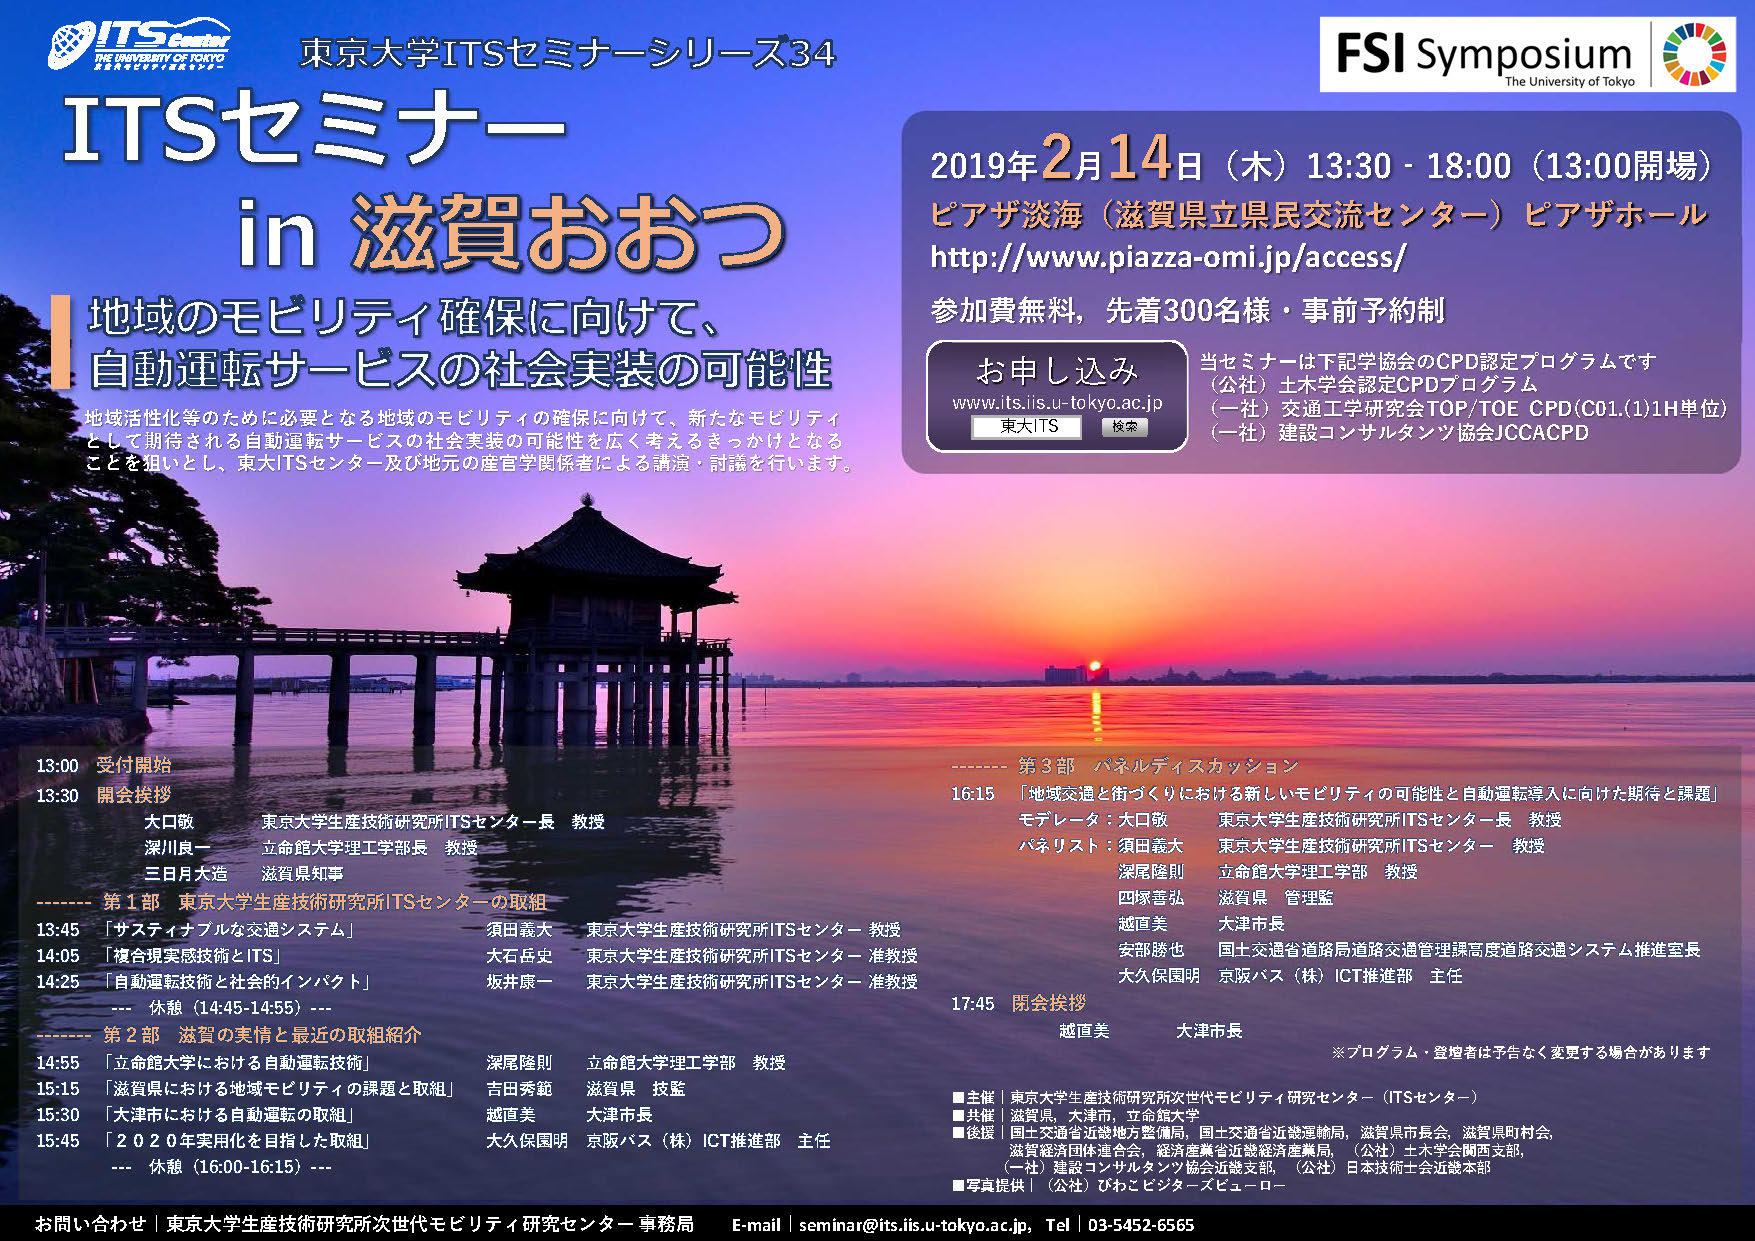 20190214_ITS-seminar-in-shiga_02.jpg